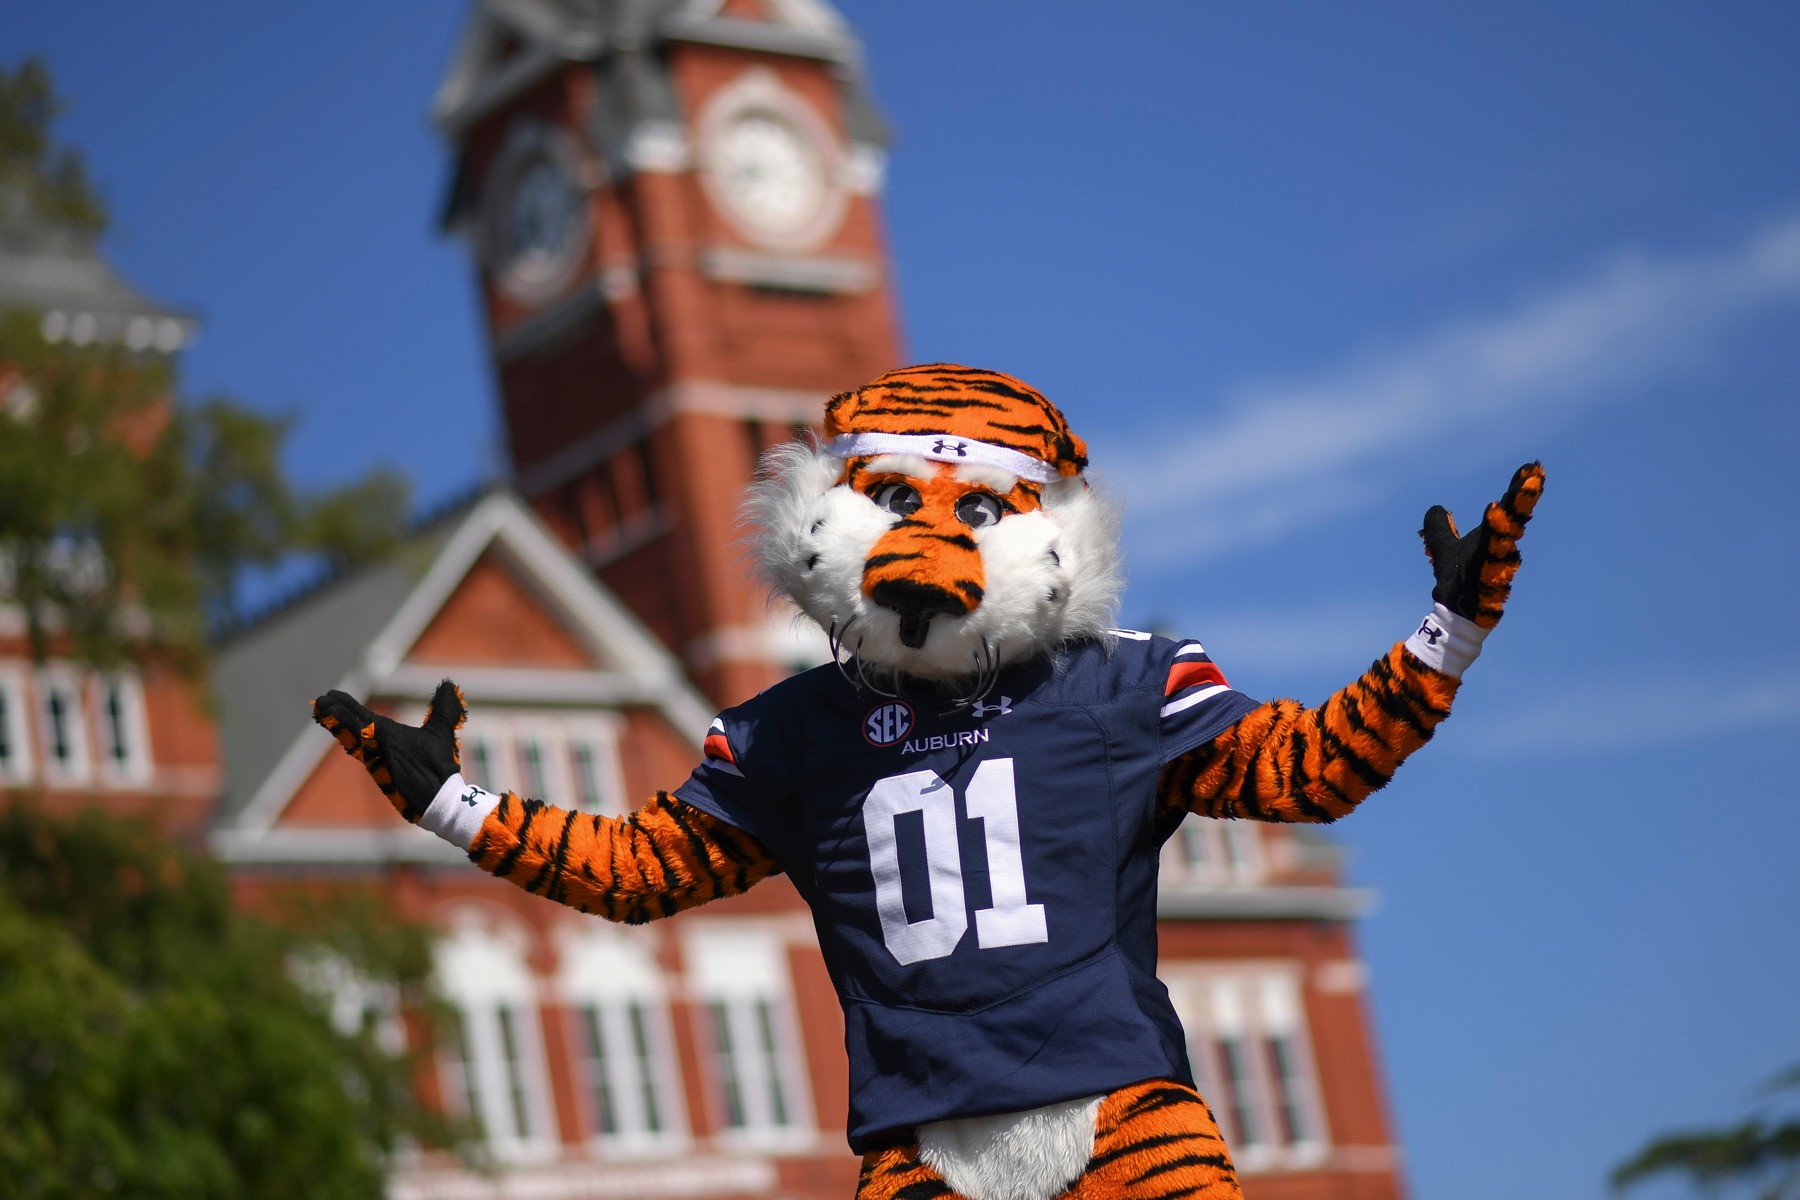 Who is Aubie the Tiger? Auburn University's mascot